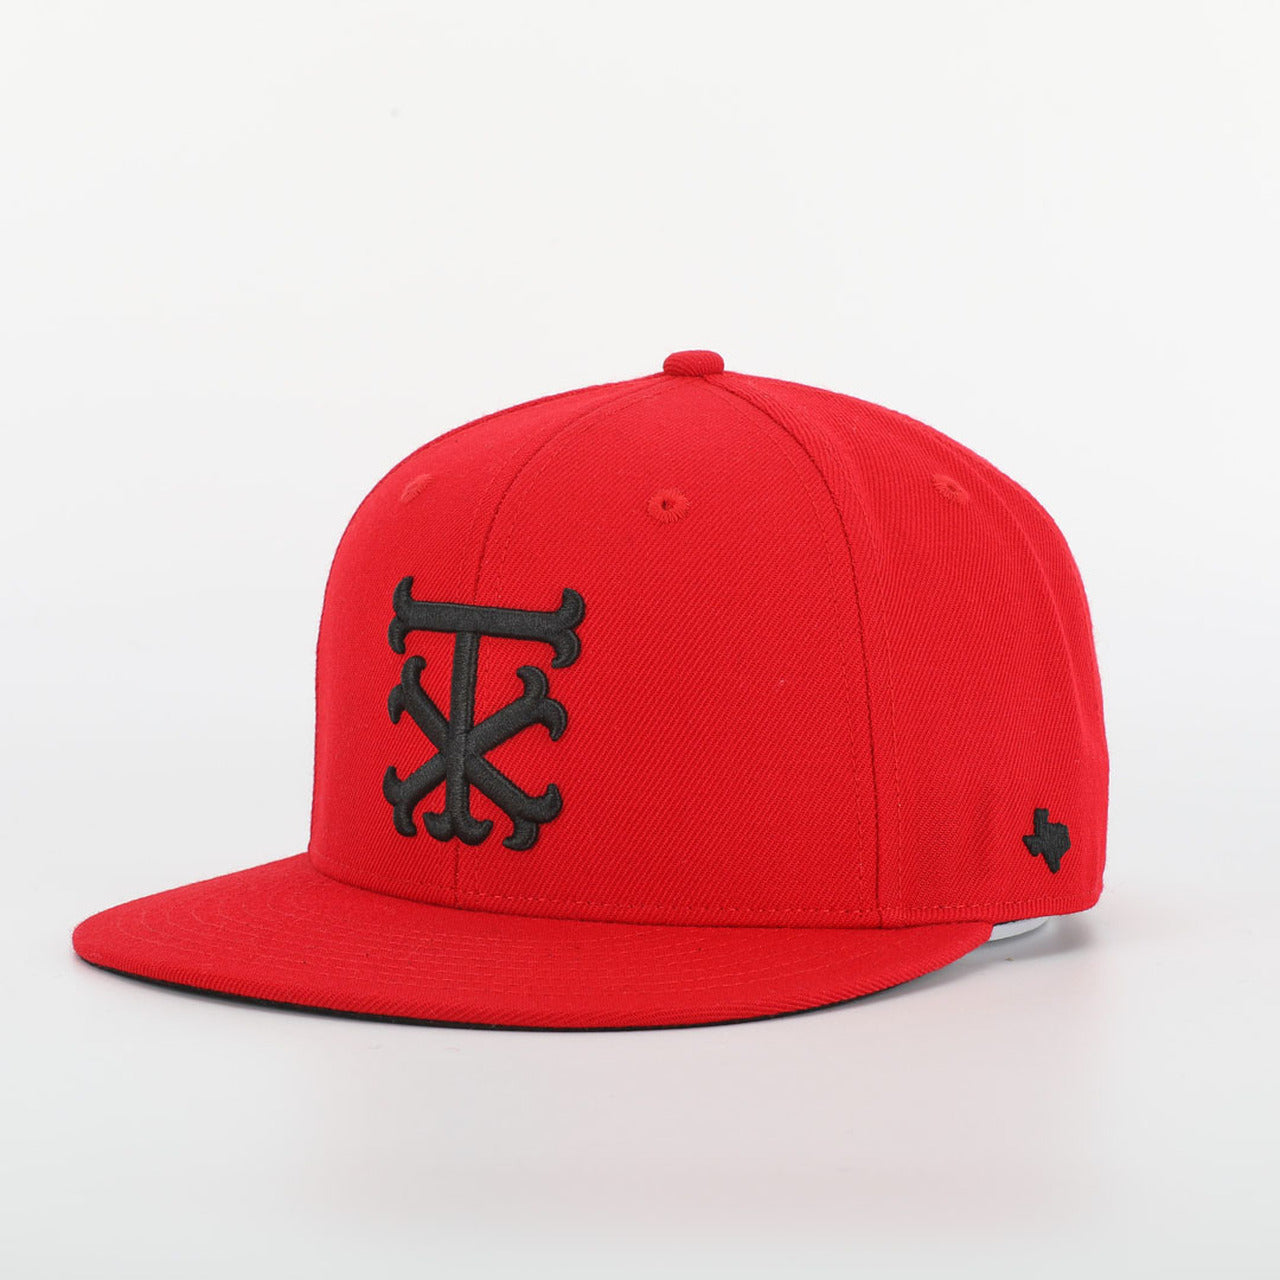 Txers, Txers Gear, Snapback, Texas Hat, TX Hat, New Era, 59fifty